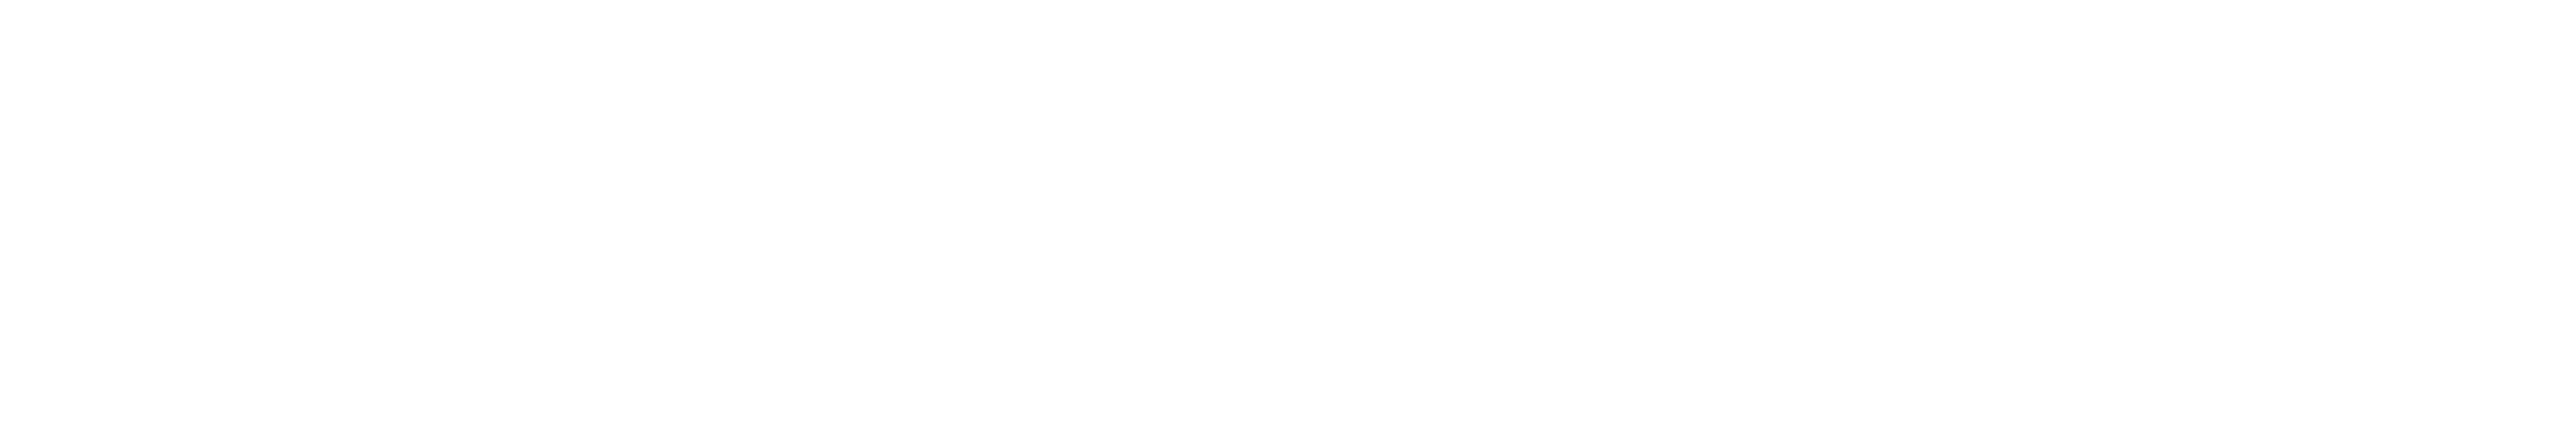 Customer app and platform Logo 01